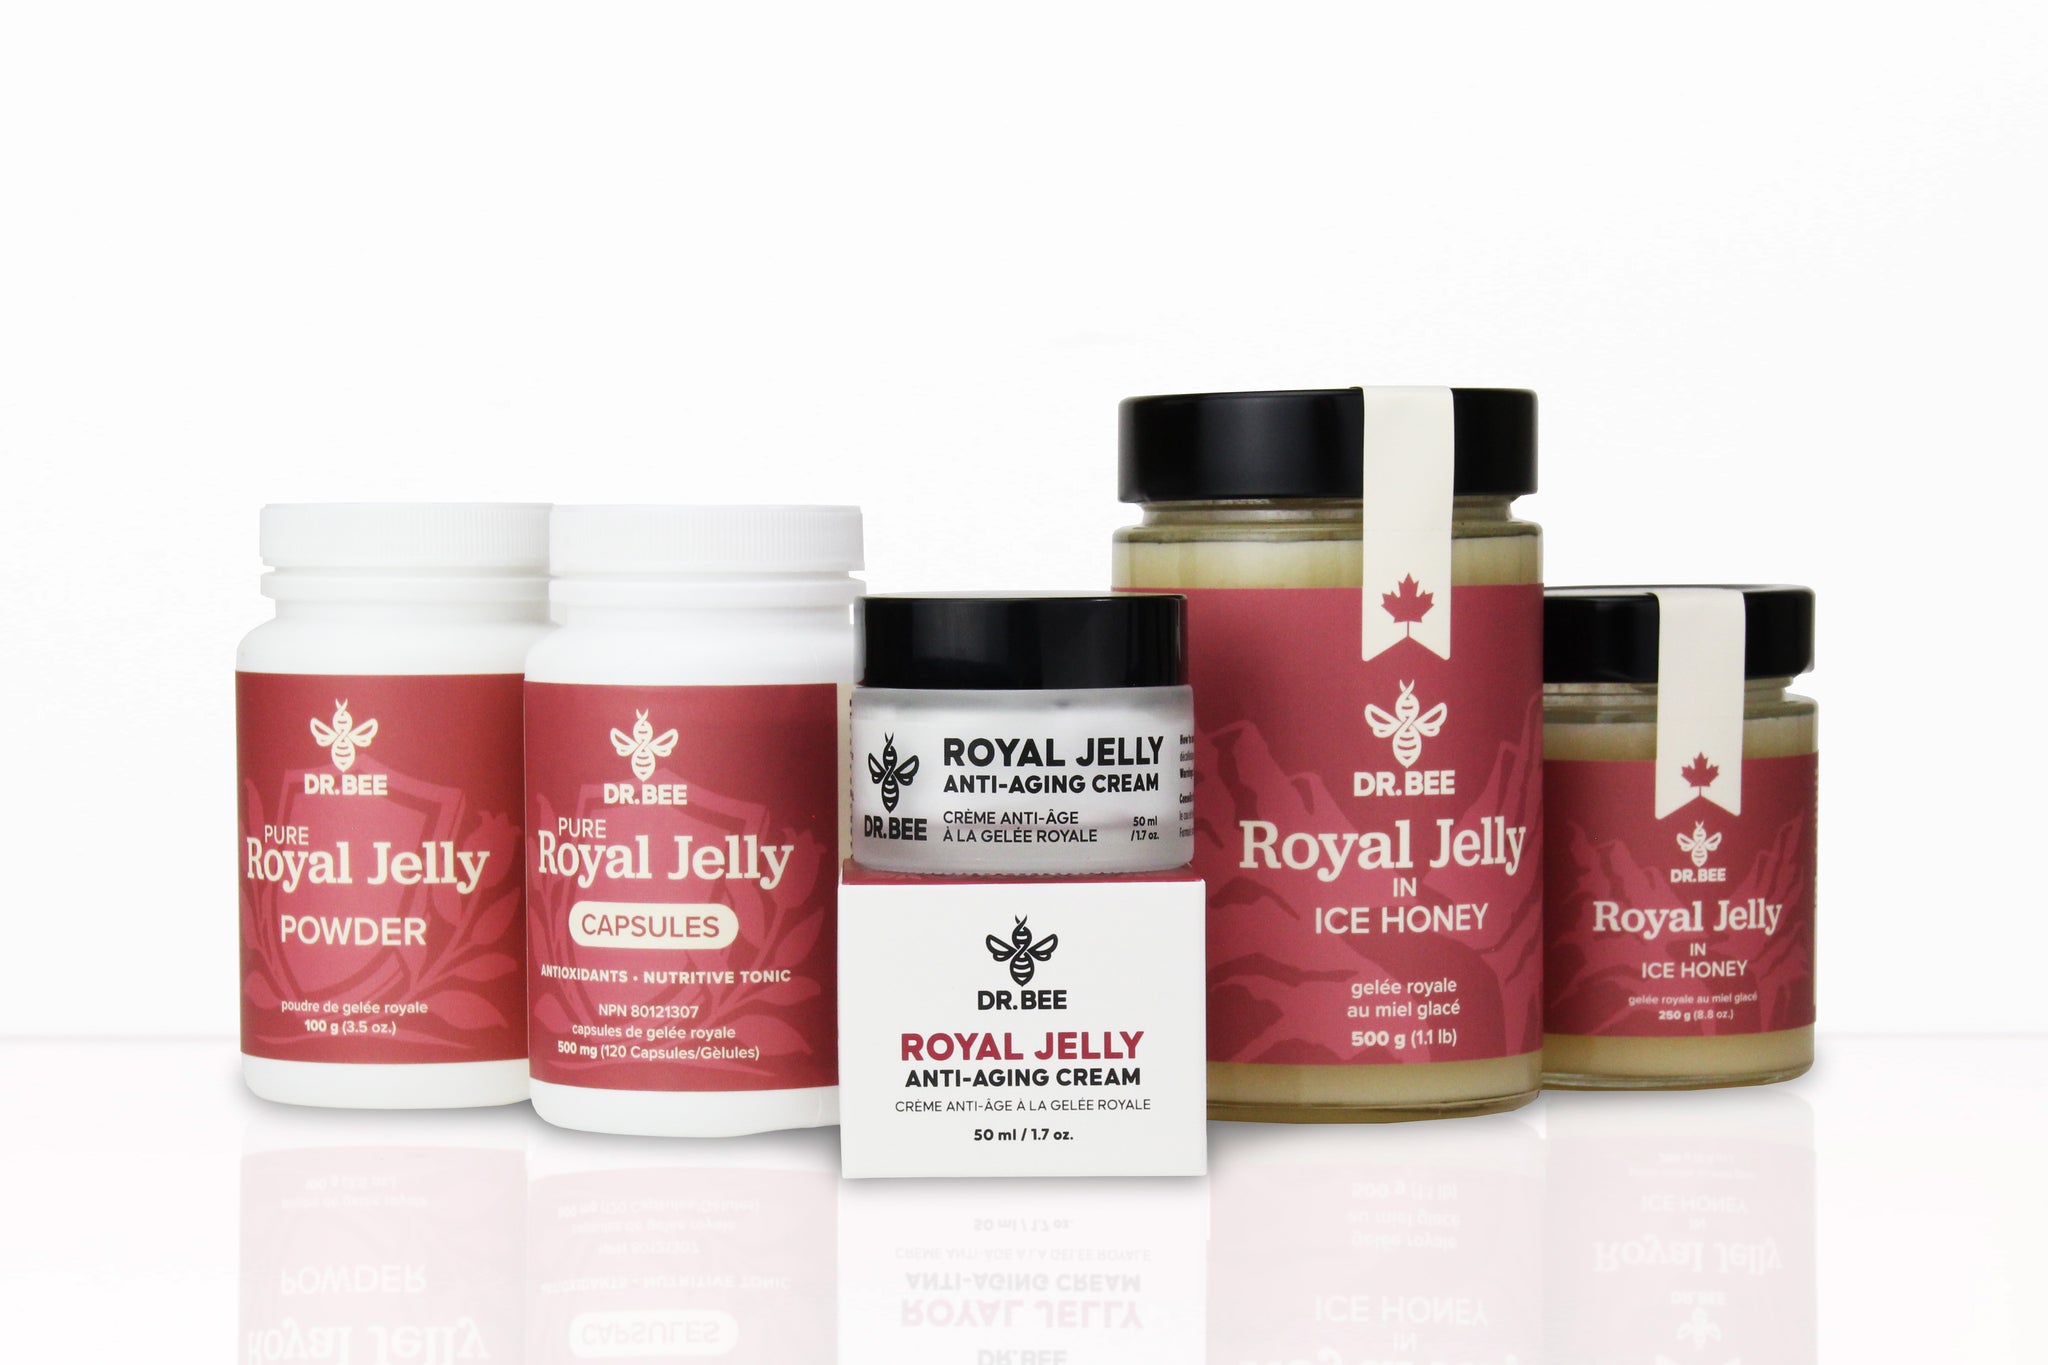 Royal Jelly in Ice Honey